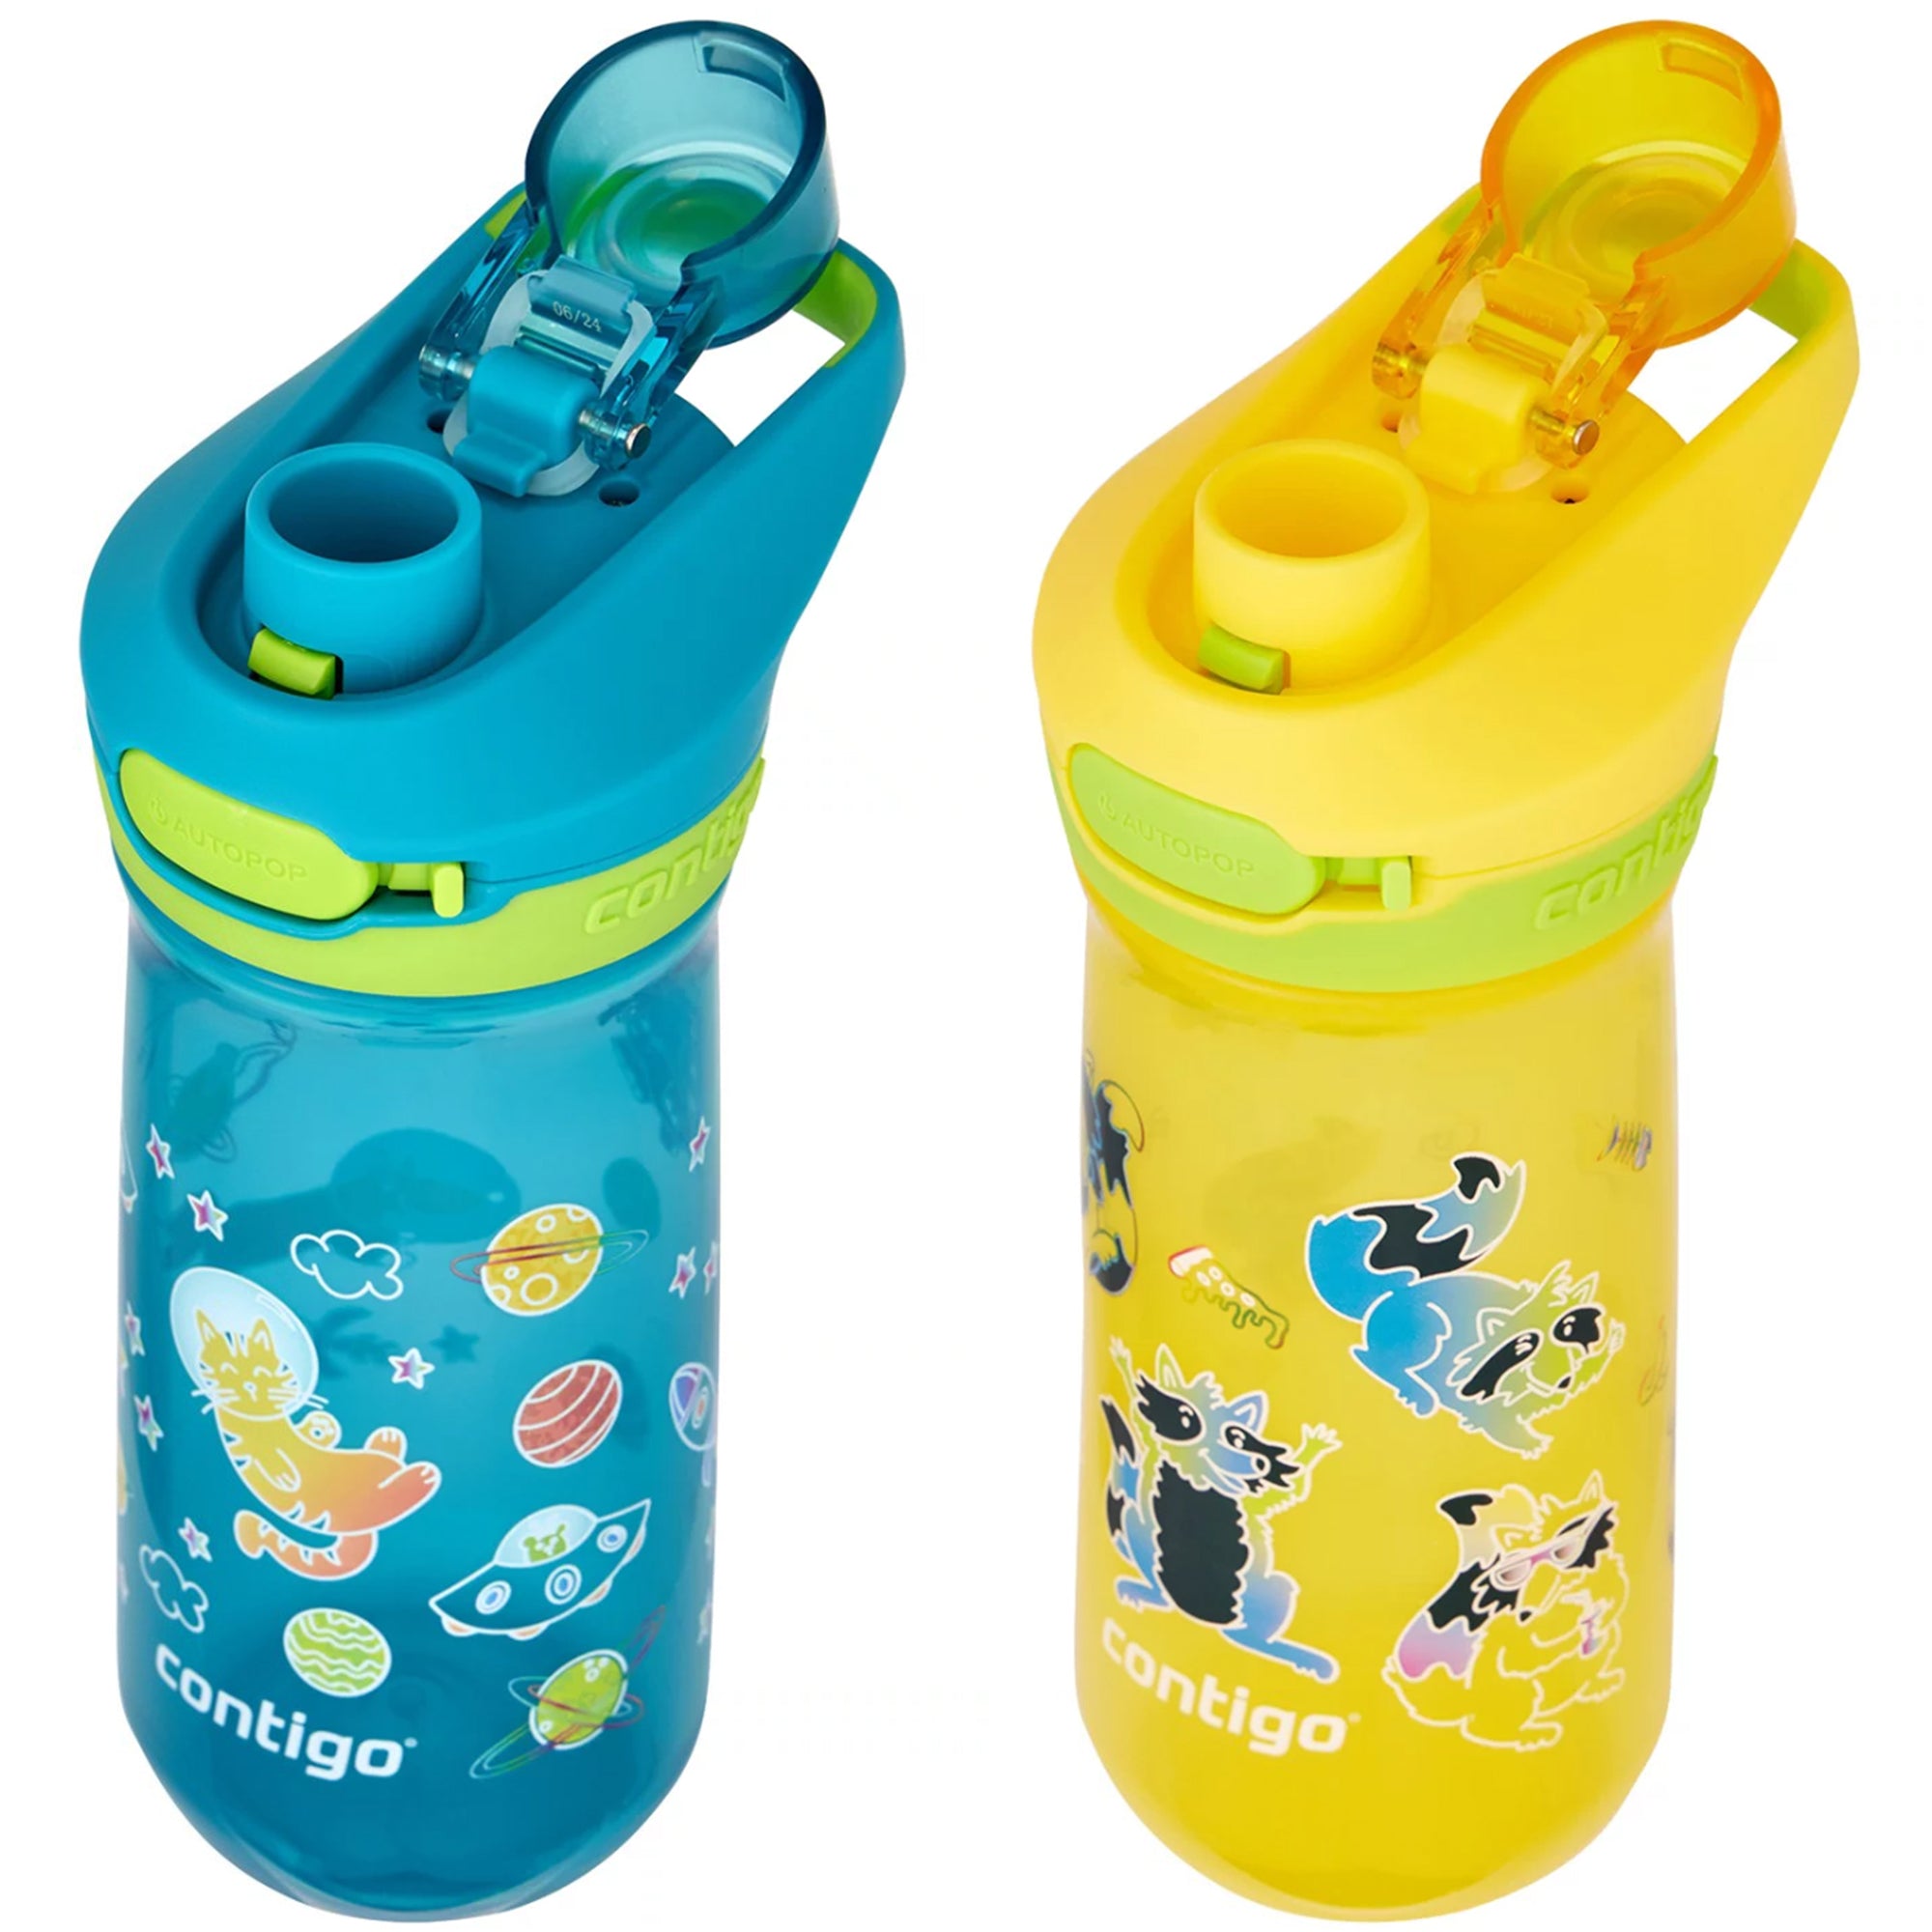 Contigo Kid's 14 oz. Jessie Water Bottle 2-Pack - Spacecraft/Trash Pandas Contigo